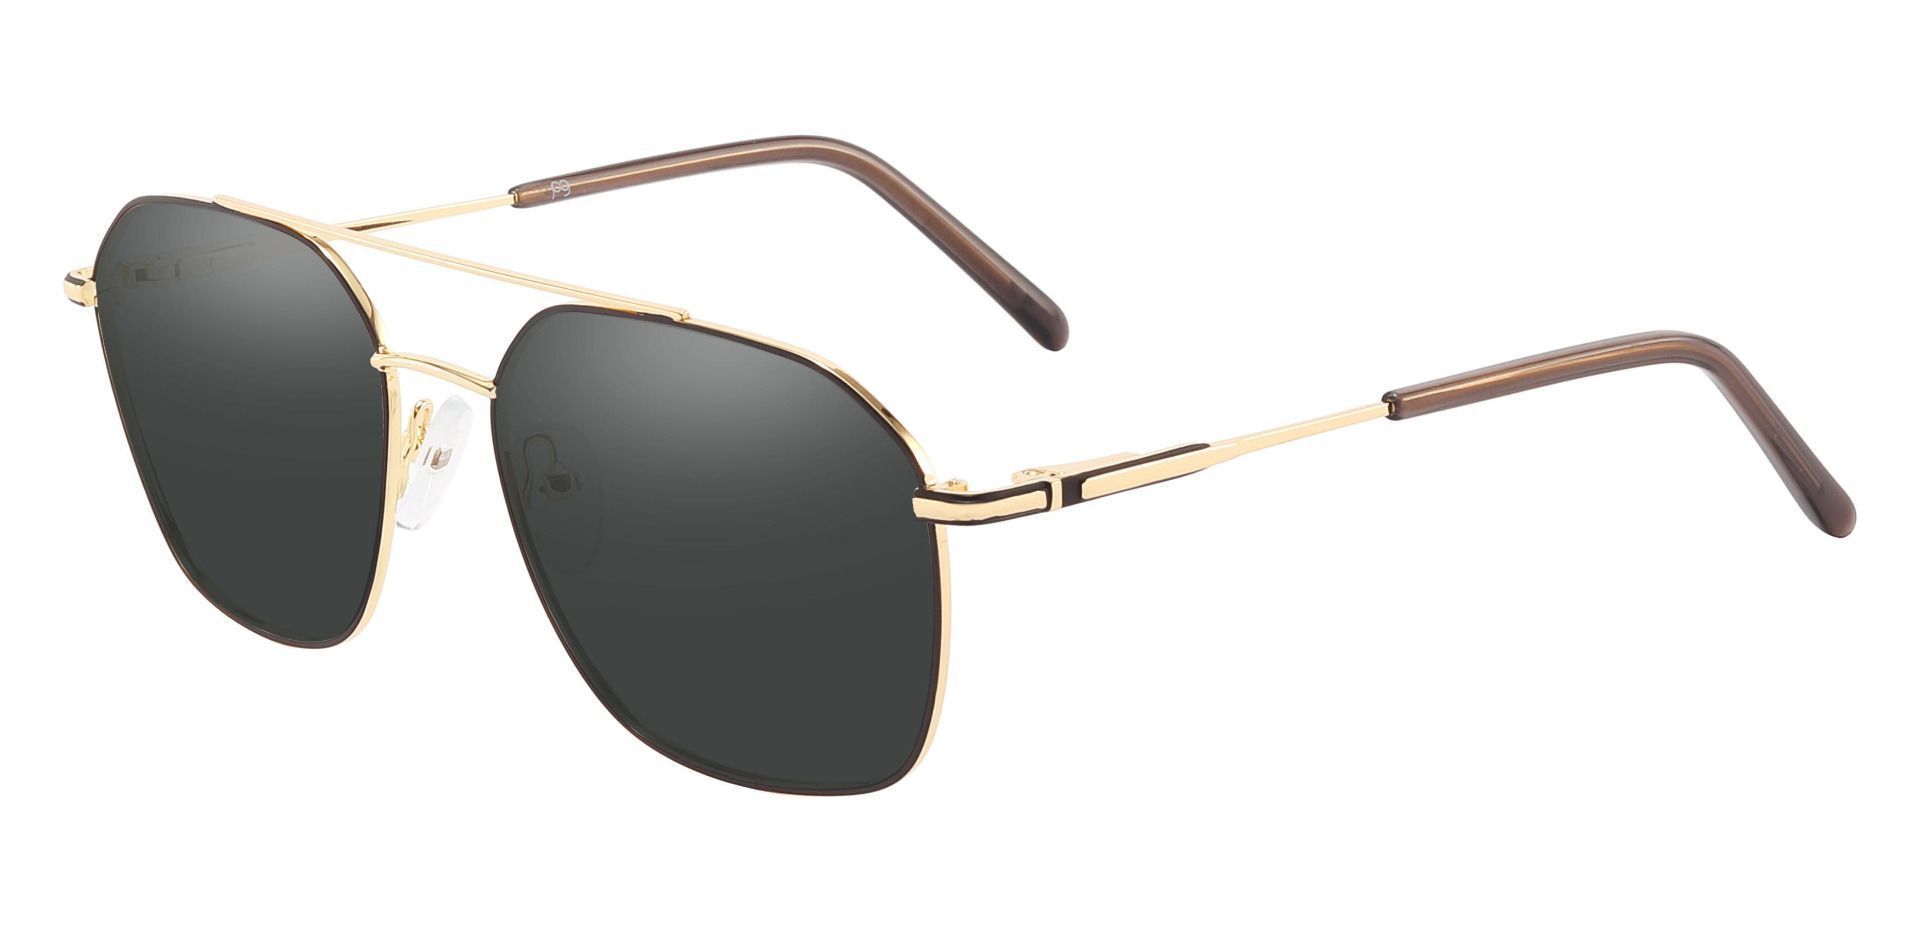 Harvey Aviator Lined Bifocal Sunglasses - Gold Frame With Gray Lenses